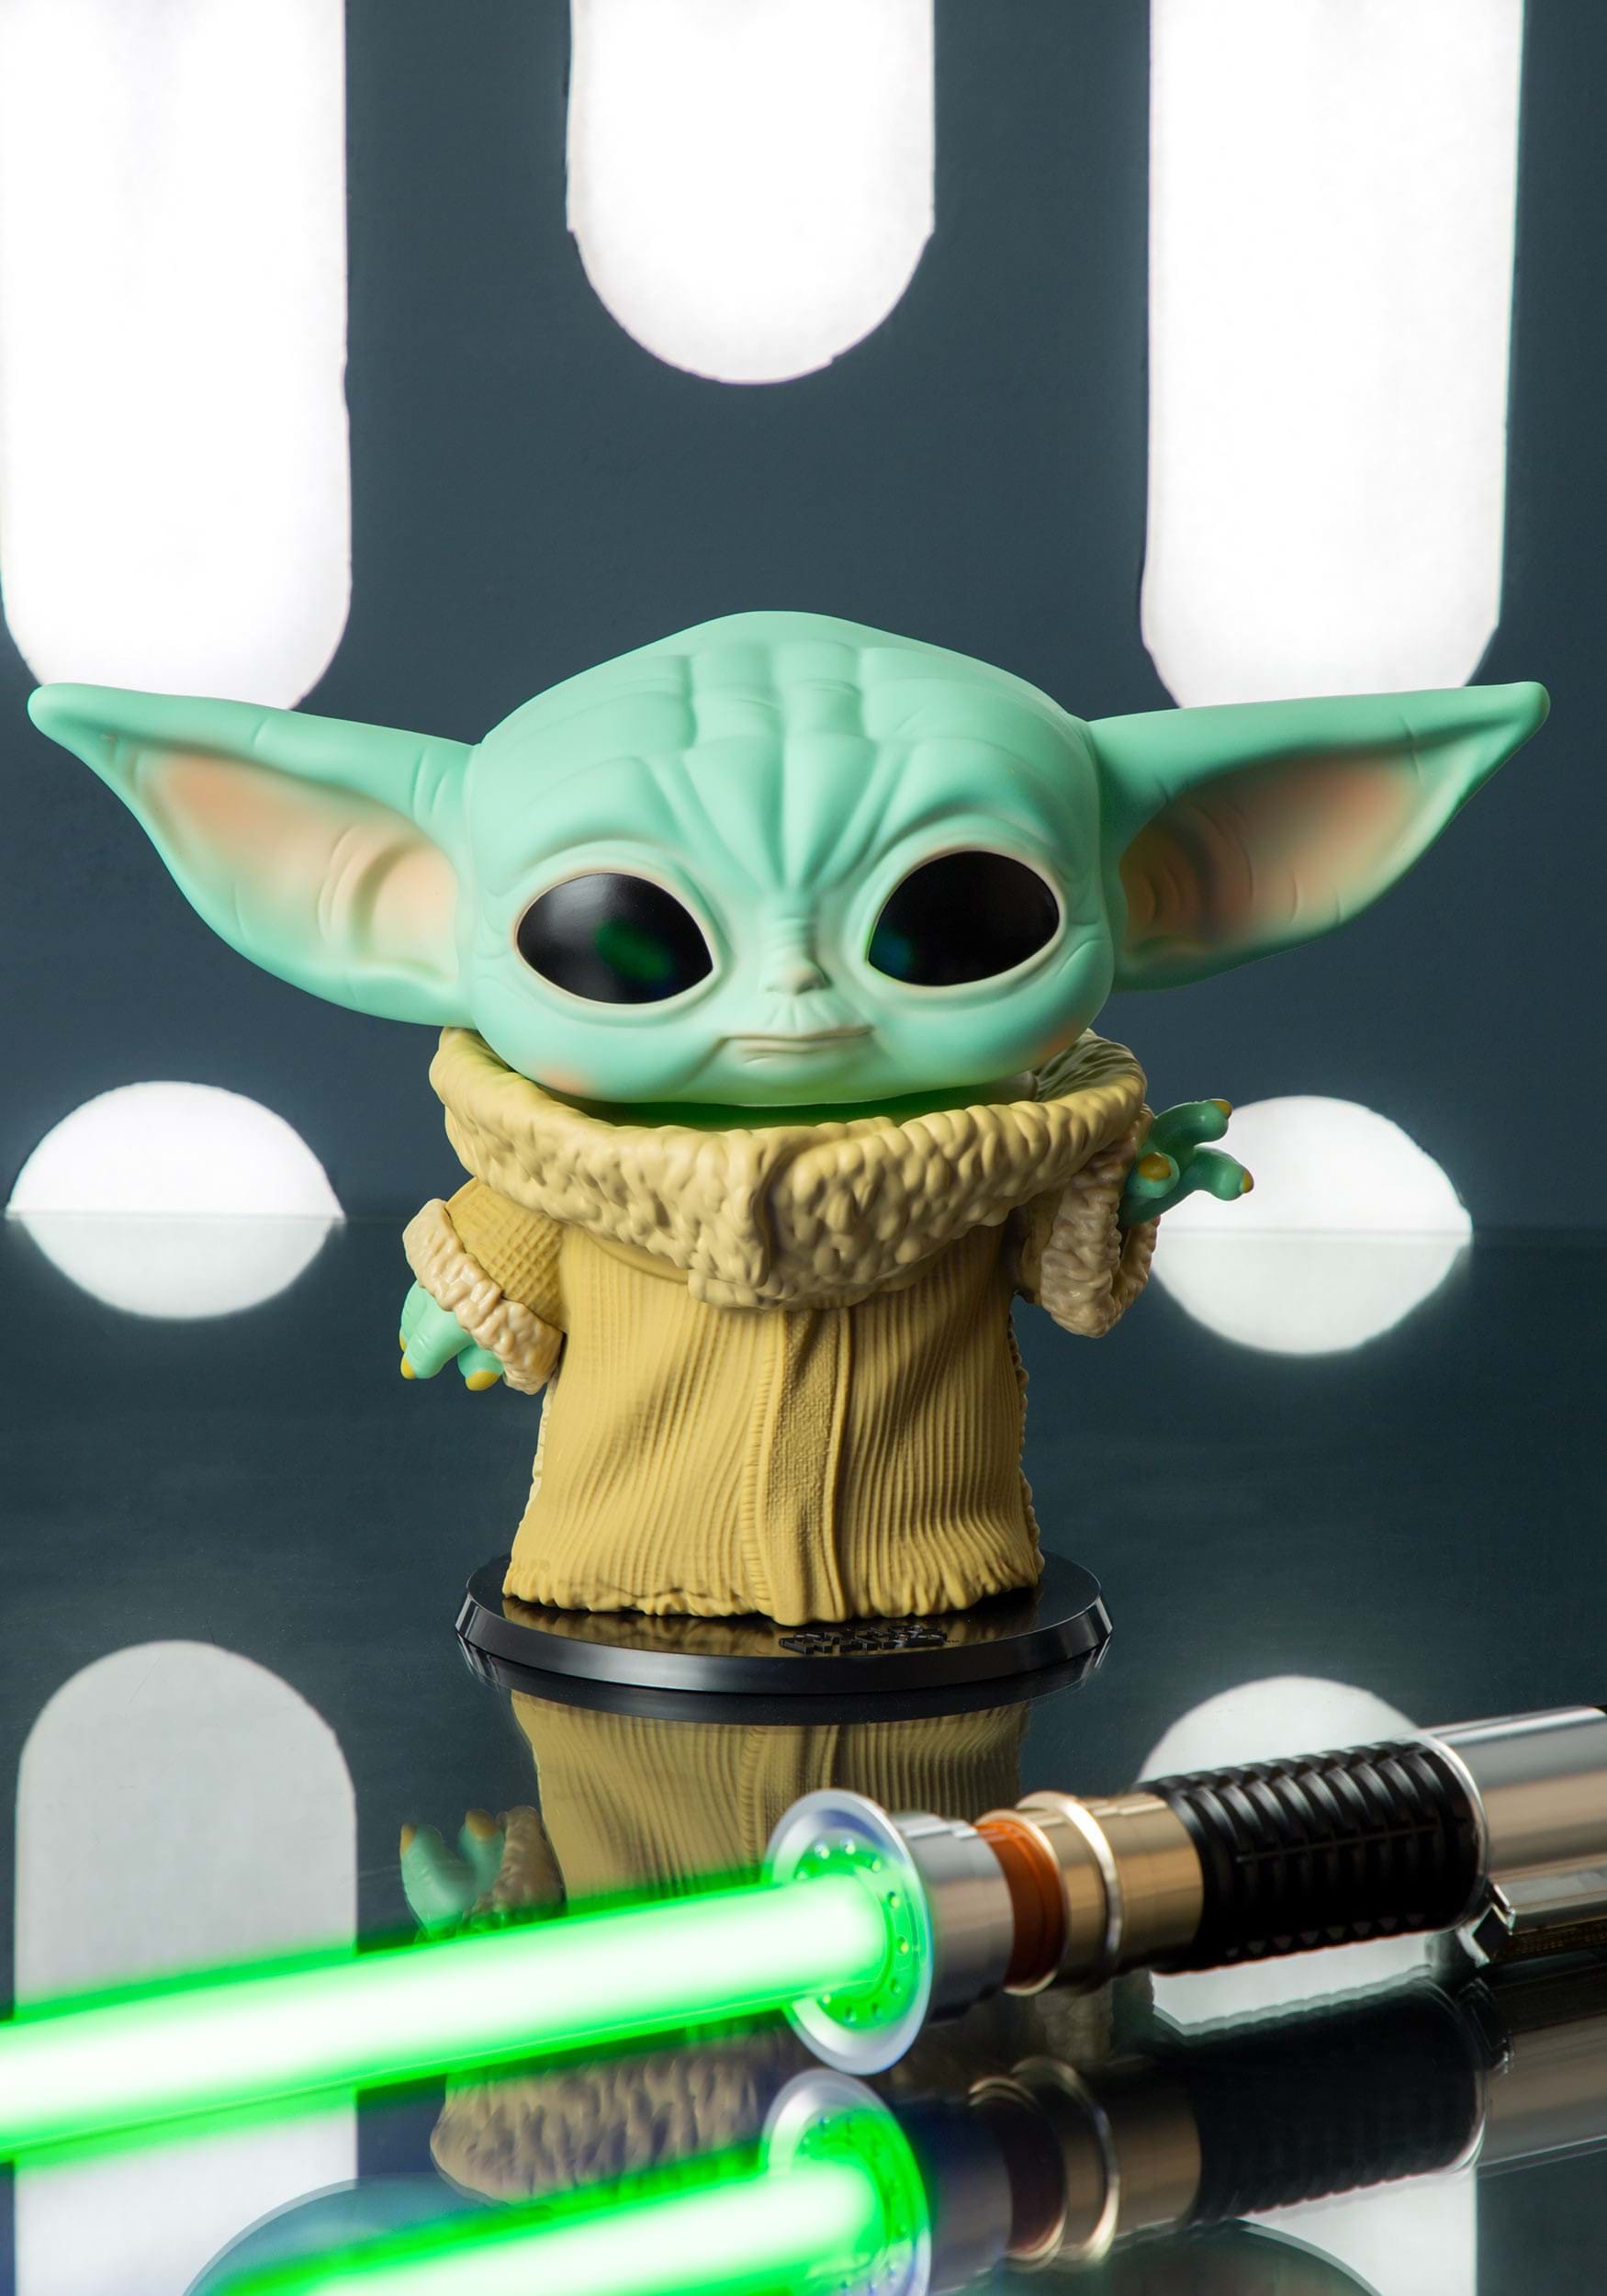 Figurine Funko Pop XXL Star Wars The Mandalorian avec bébé Yoda